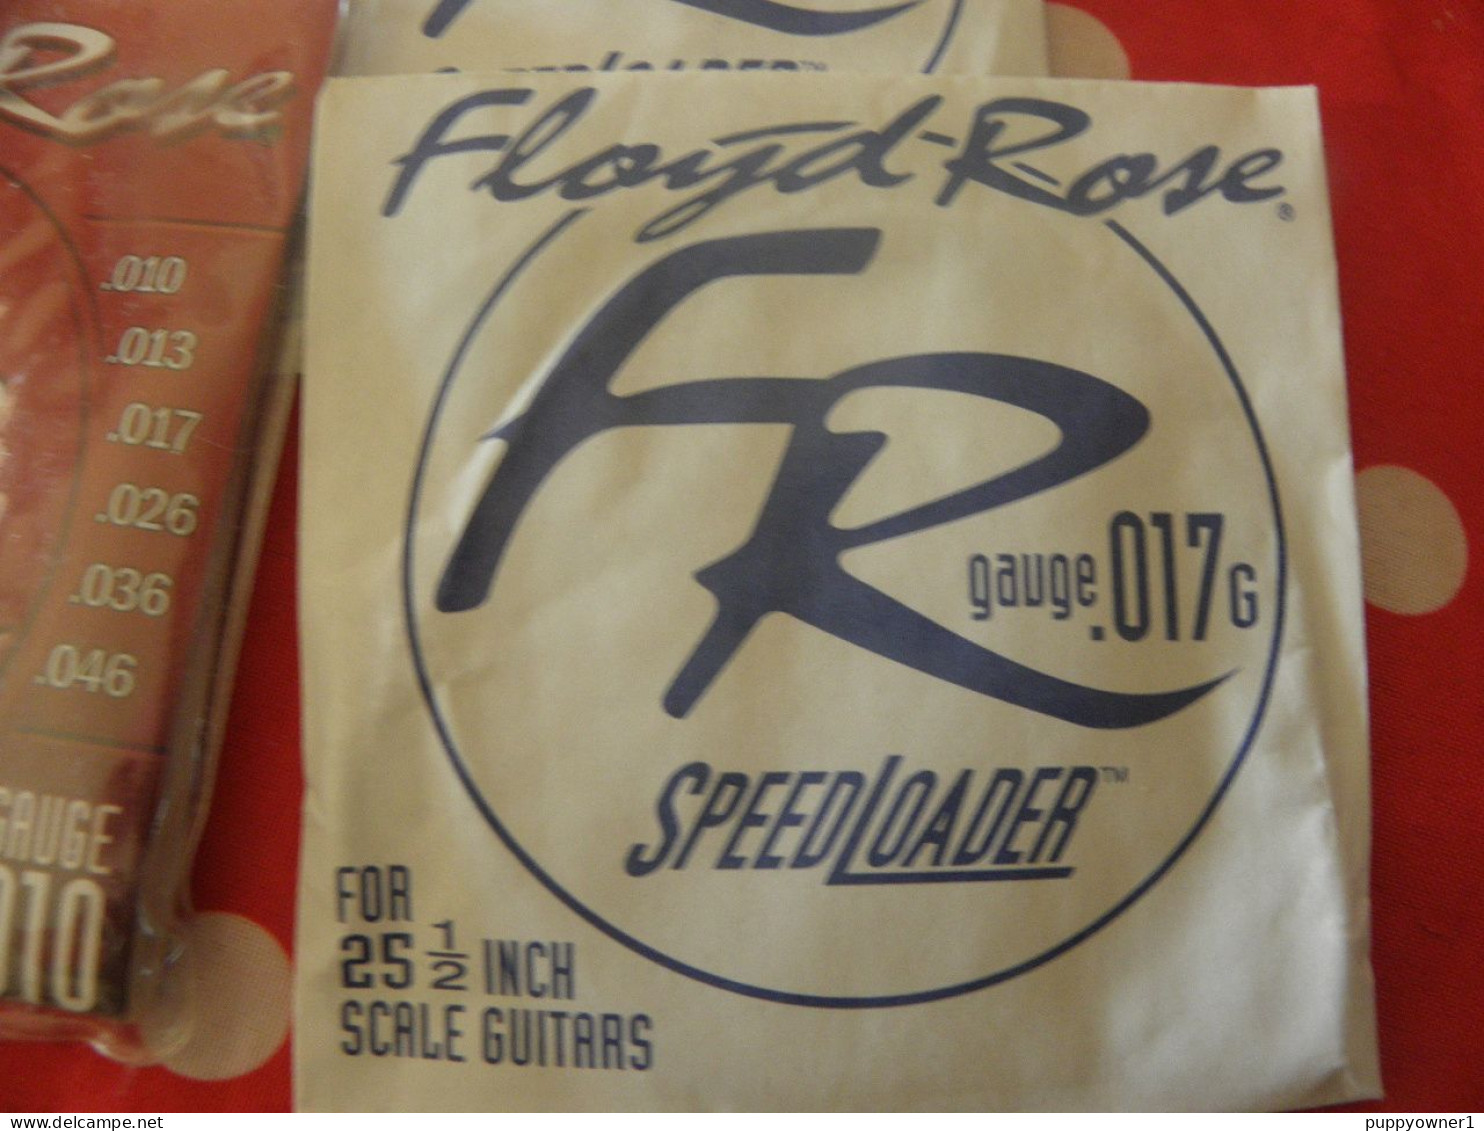 Rare 3 Floyd Rose Speedloader Pour 25.5 Inch Scale Guitar Corde De Guitare 0.017g - Musikinstrumente